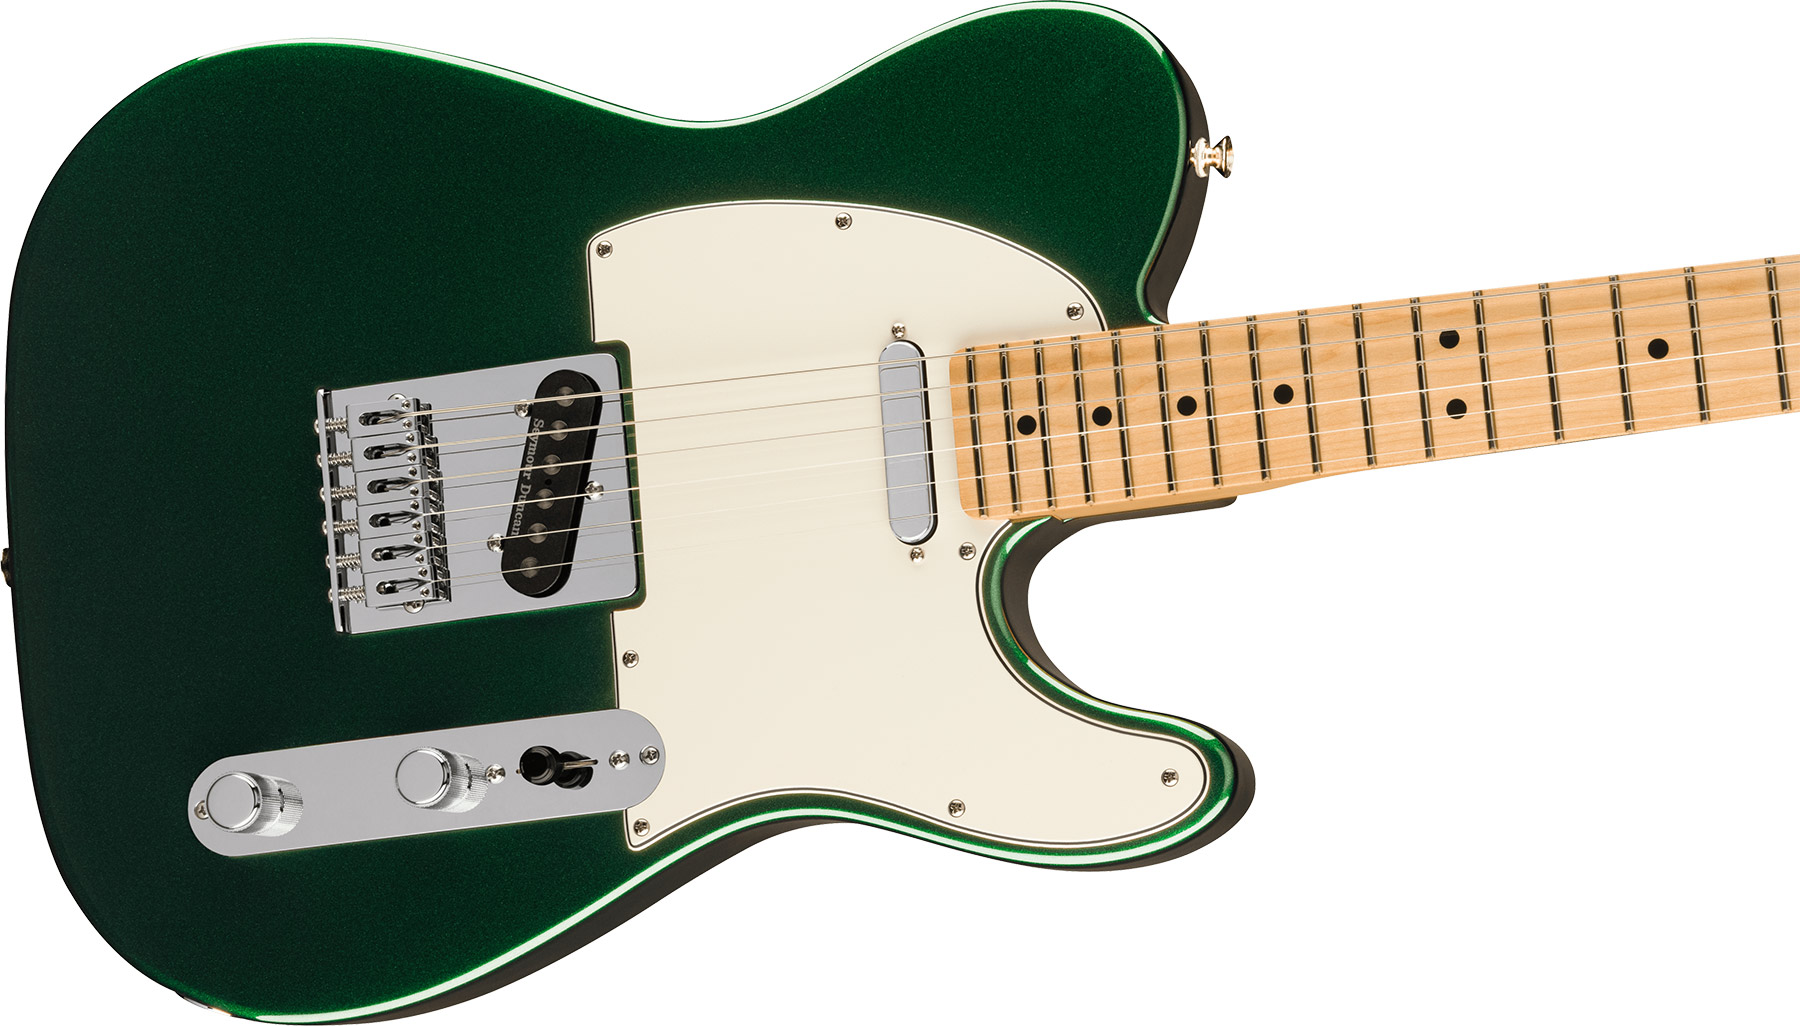 Fender Tele Player Ltd Mex 2s Seymour Duncan Mn - British Racing Green - E-Gitarre in Teleform - Variation 2